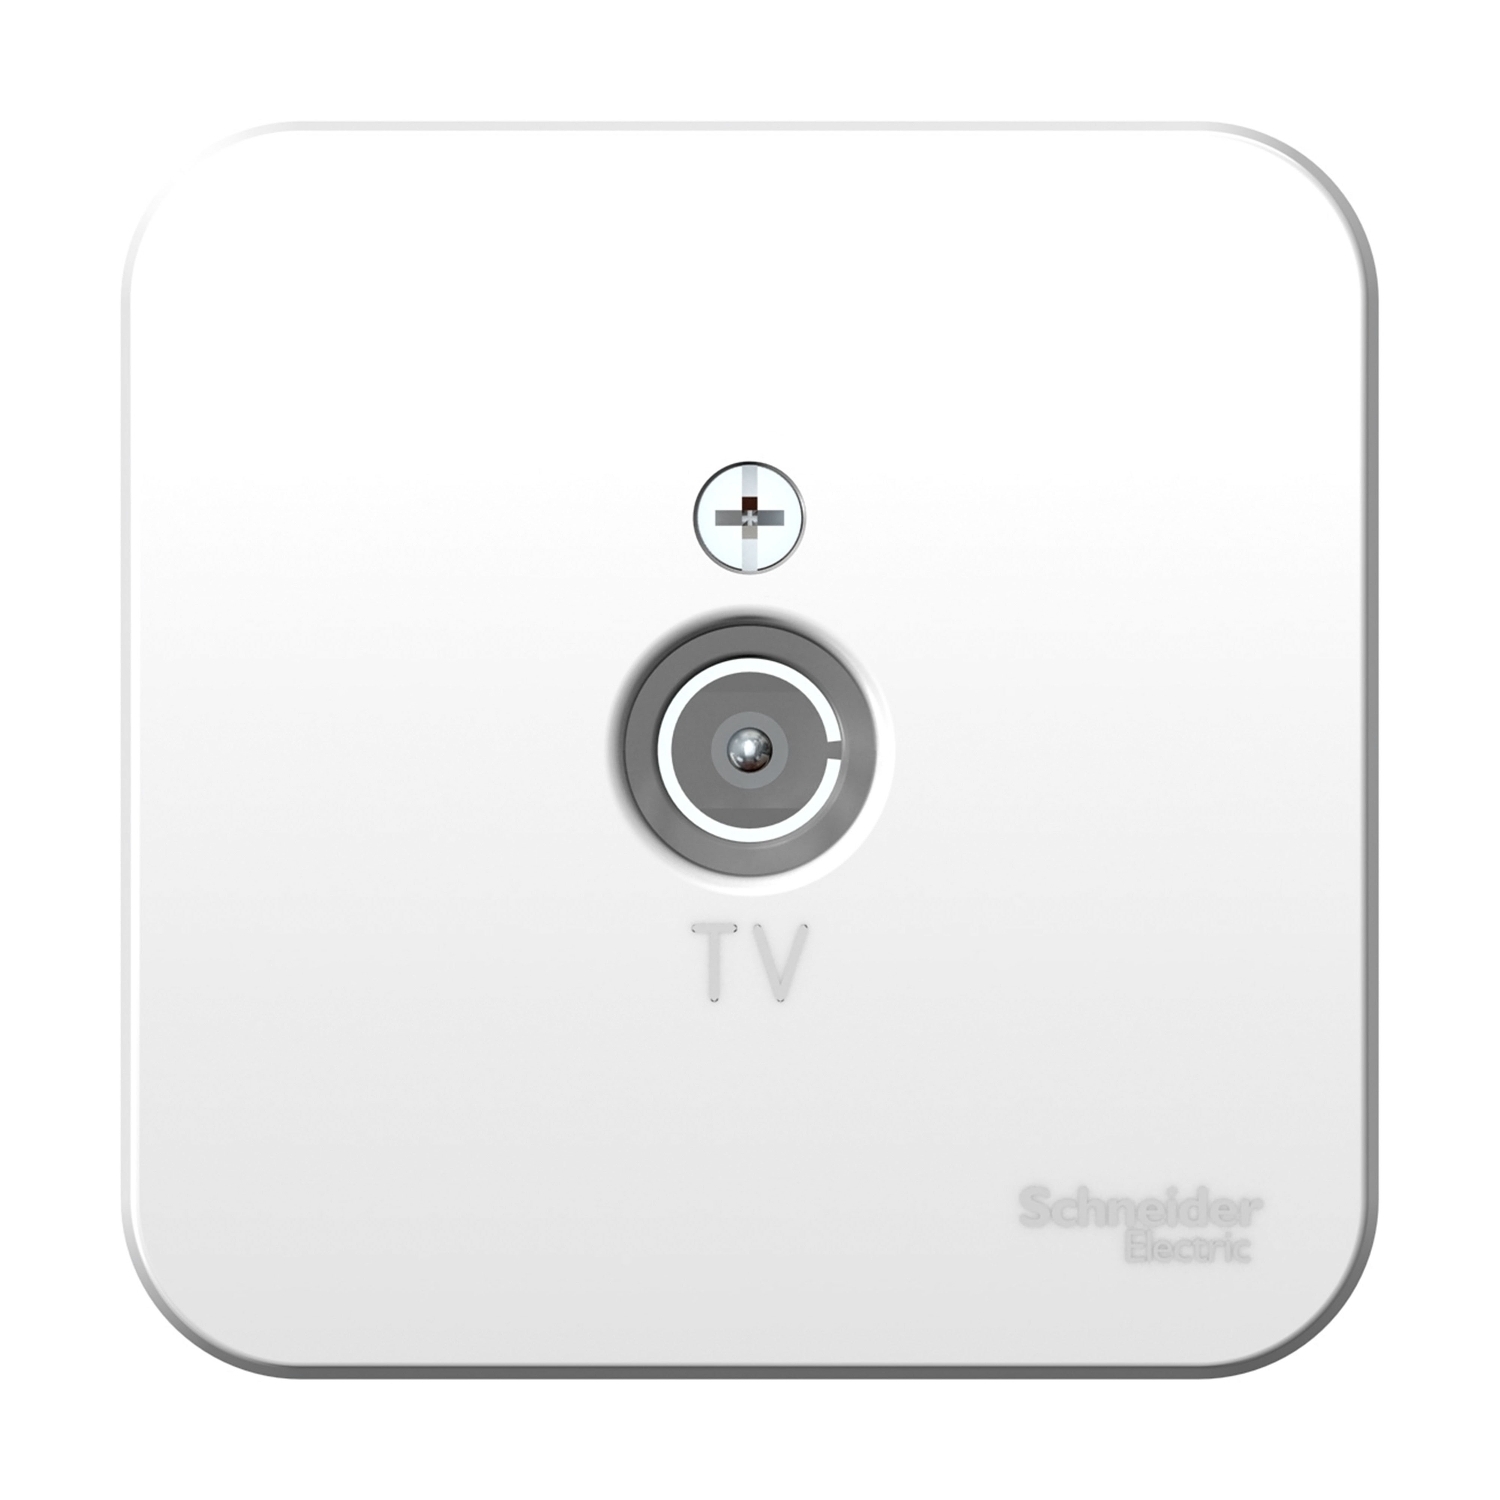 Розетка TV внешняя Schneider Electric Blanka, белый, в сборе (BLNTA000011)